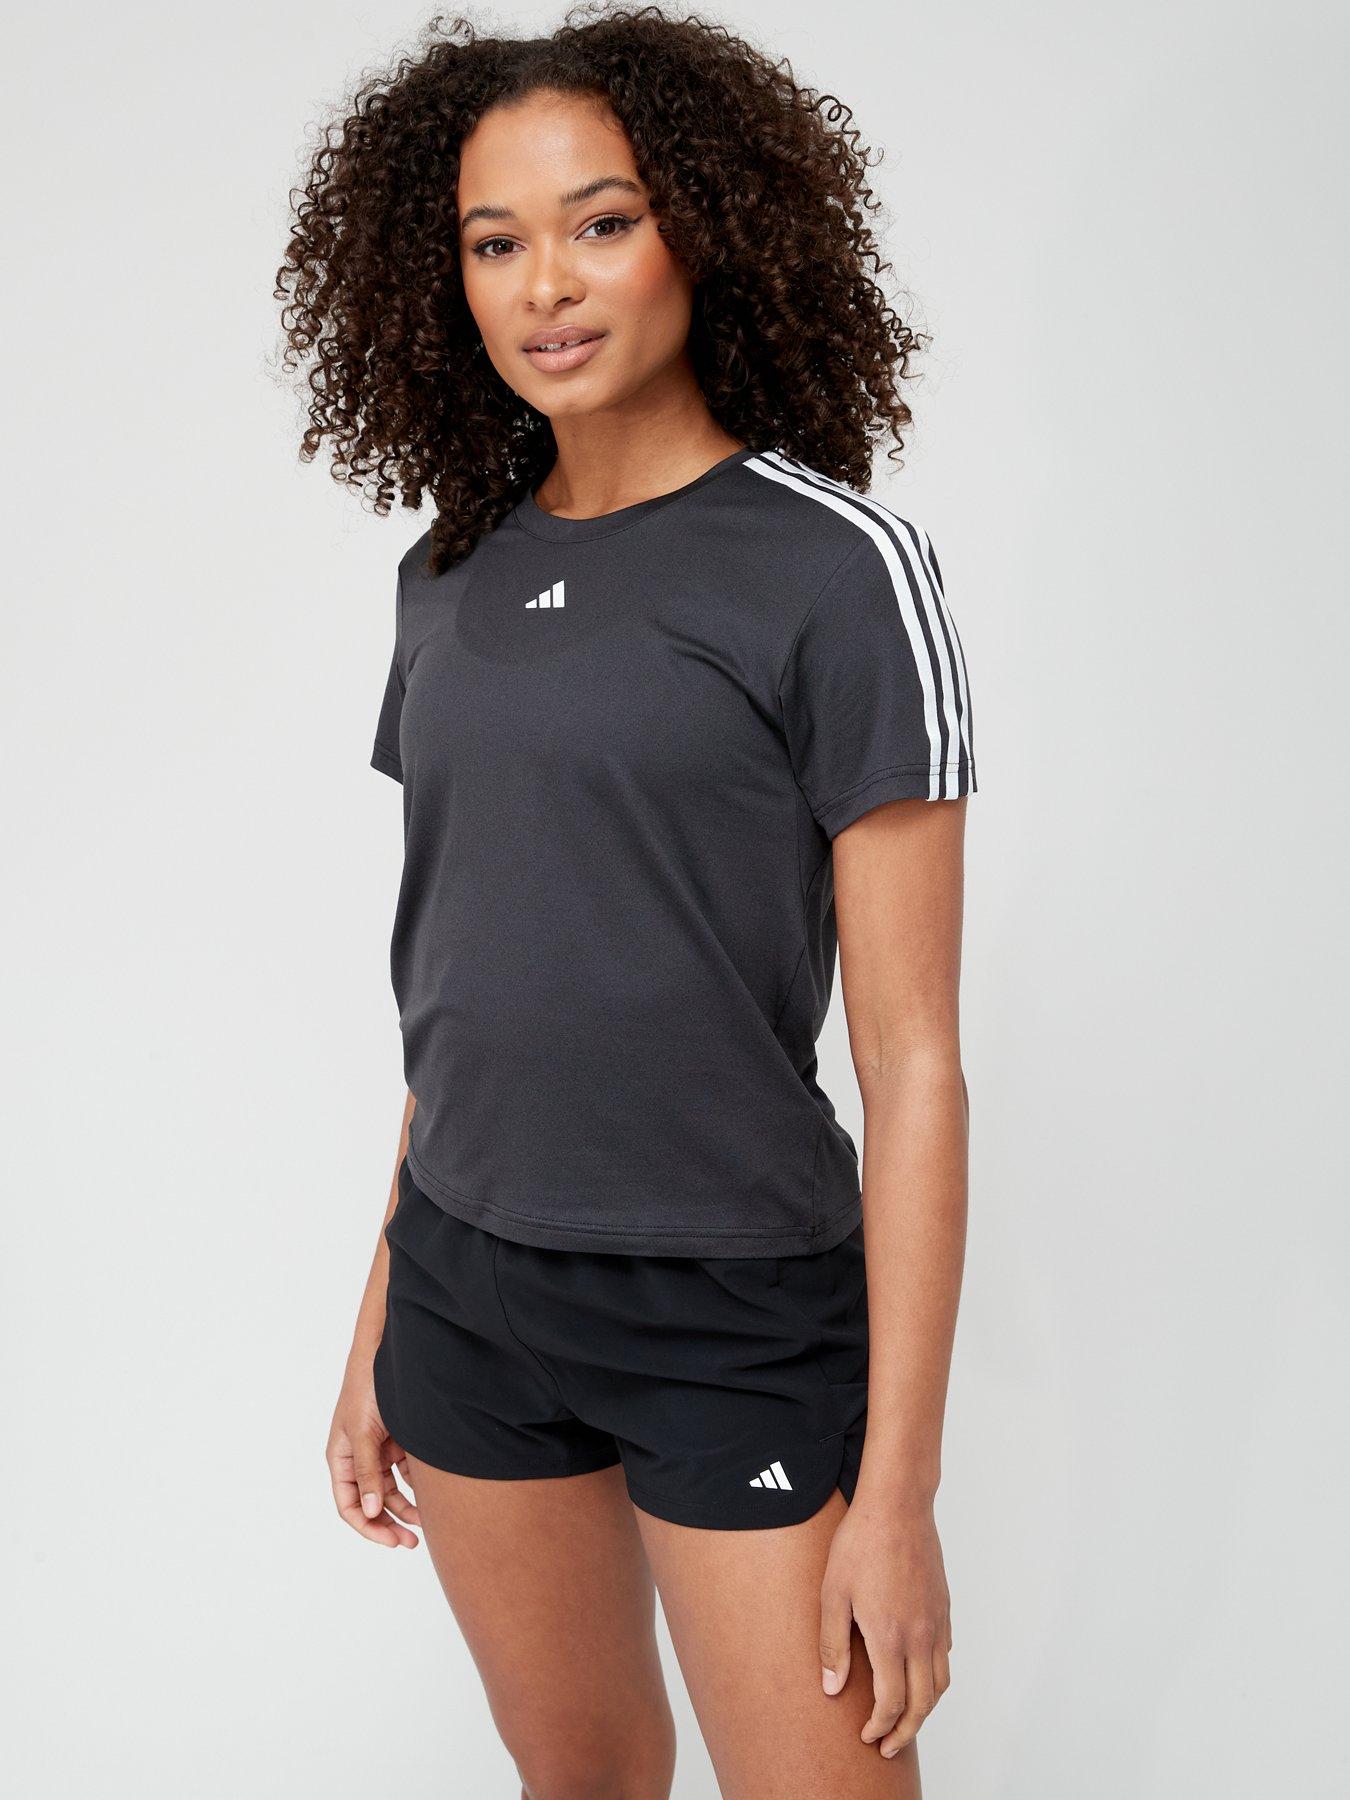 Black | Adidas | Tops & t-shirts | Women | Very Ireland